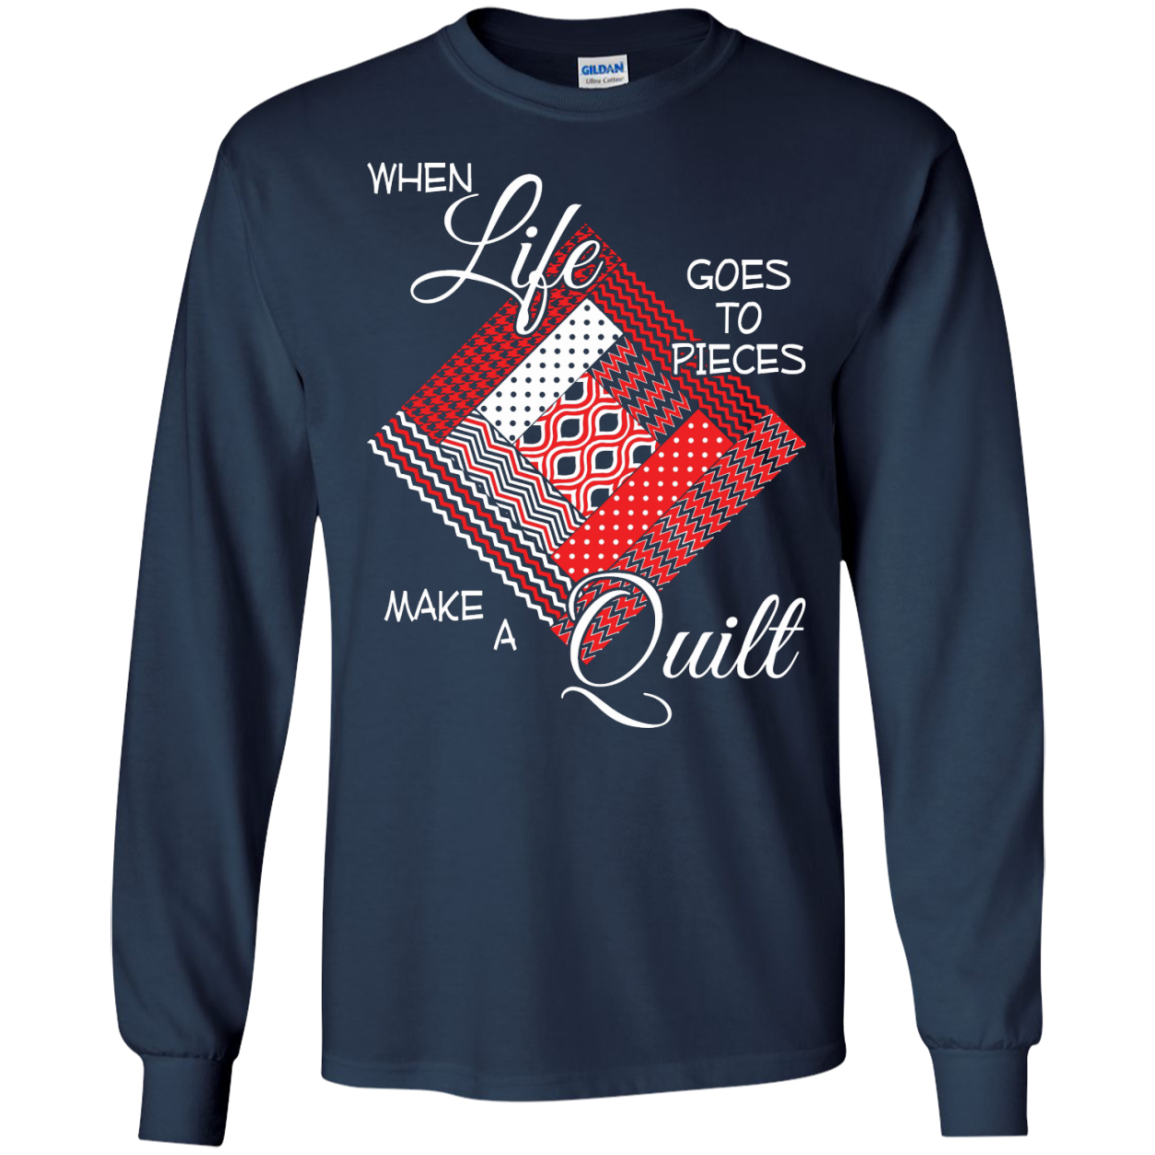 Make a Quilt (red) Long Sleeve Ultra Cotton T-Shirt - Crafter4Life - 7